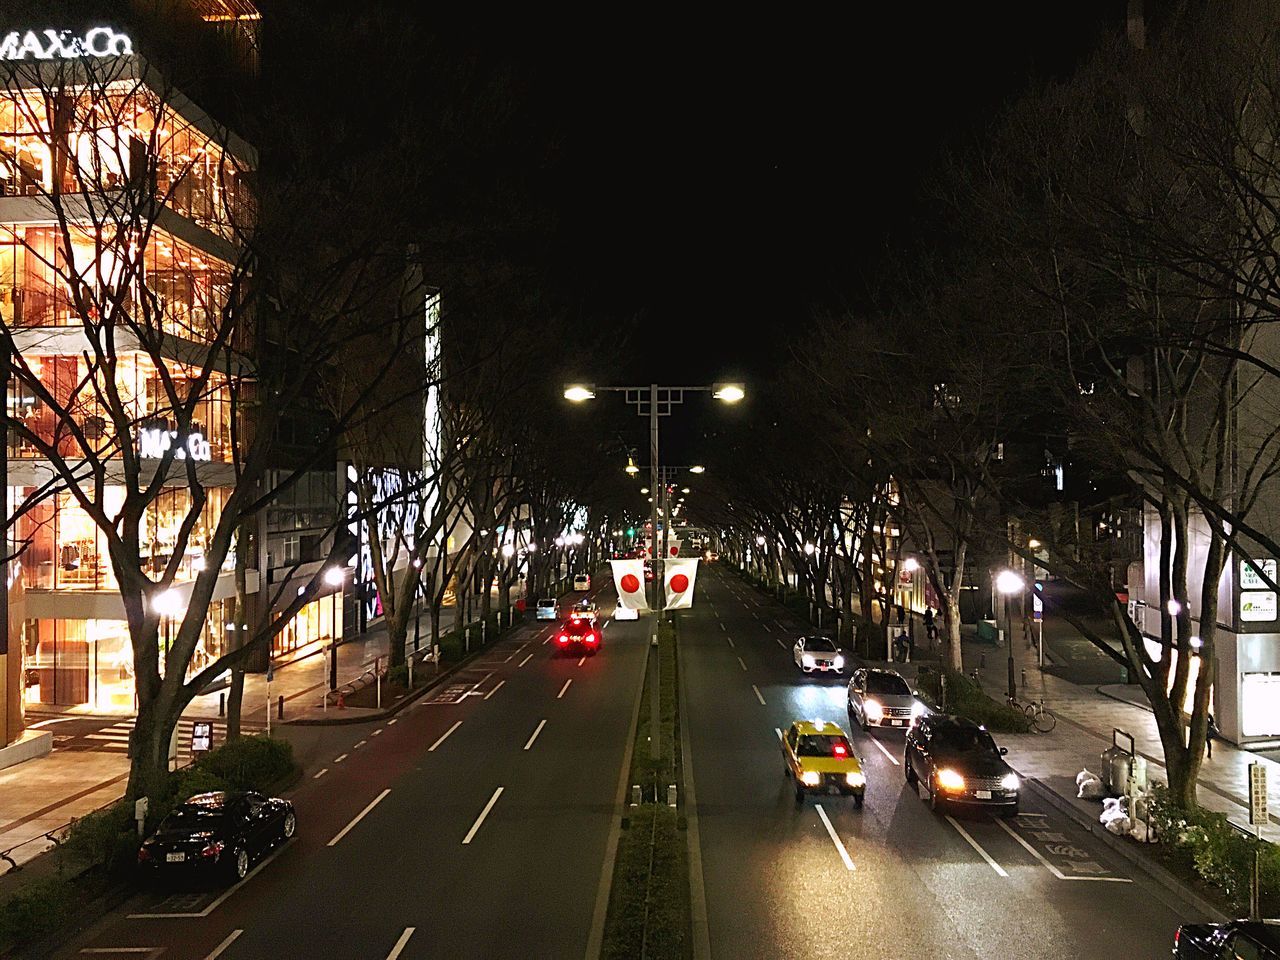 CARS ON ILLUMINATED CITY STREET AT NIGHT